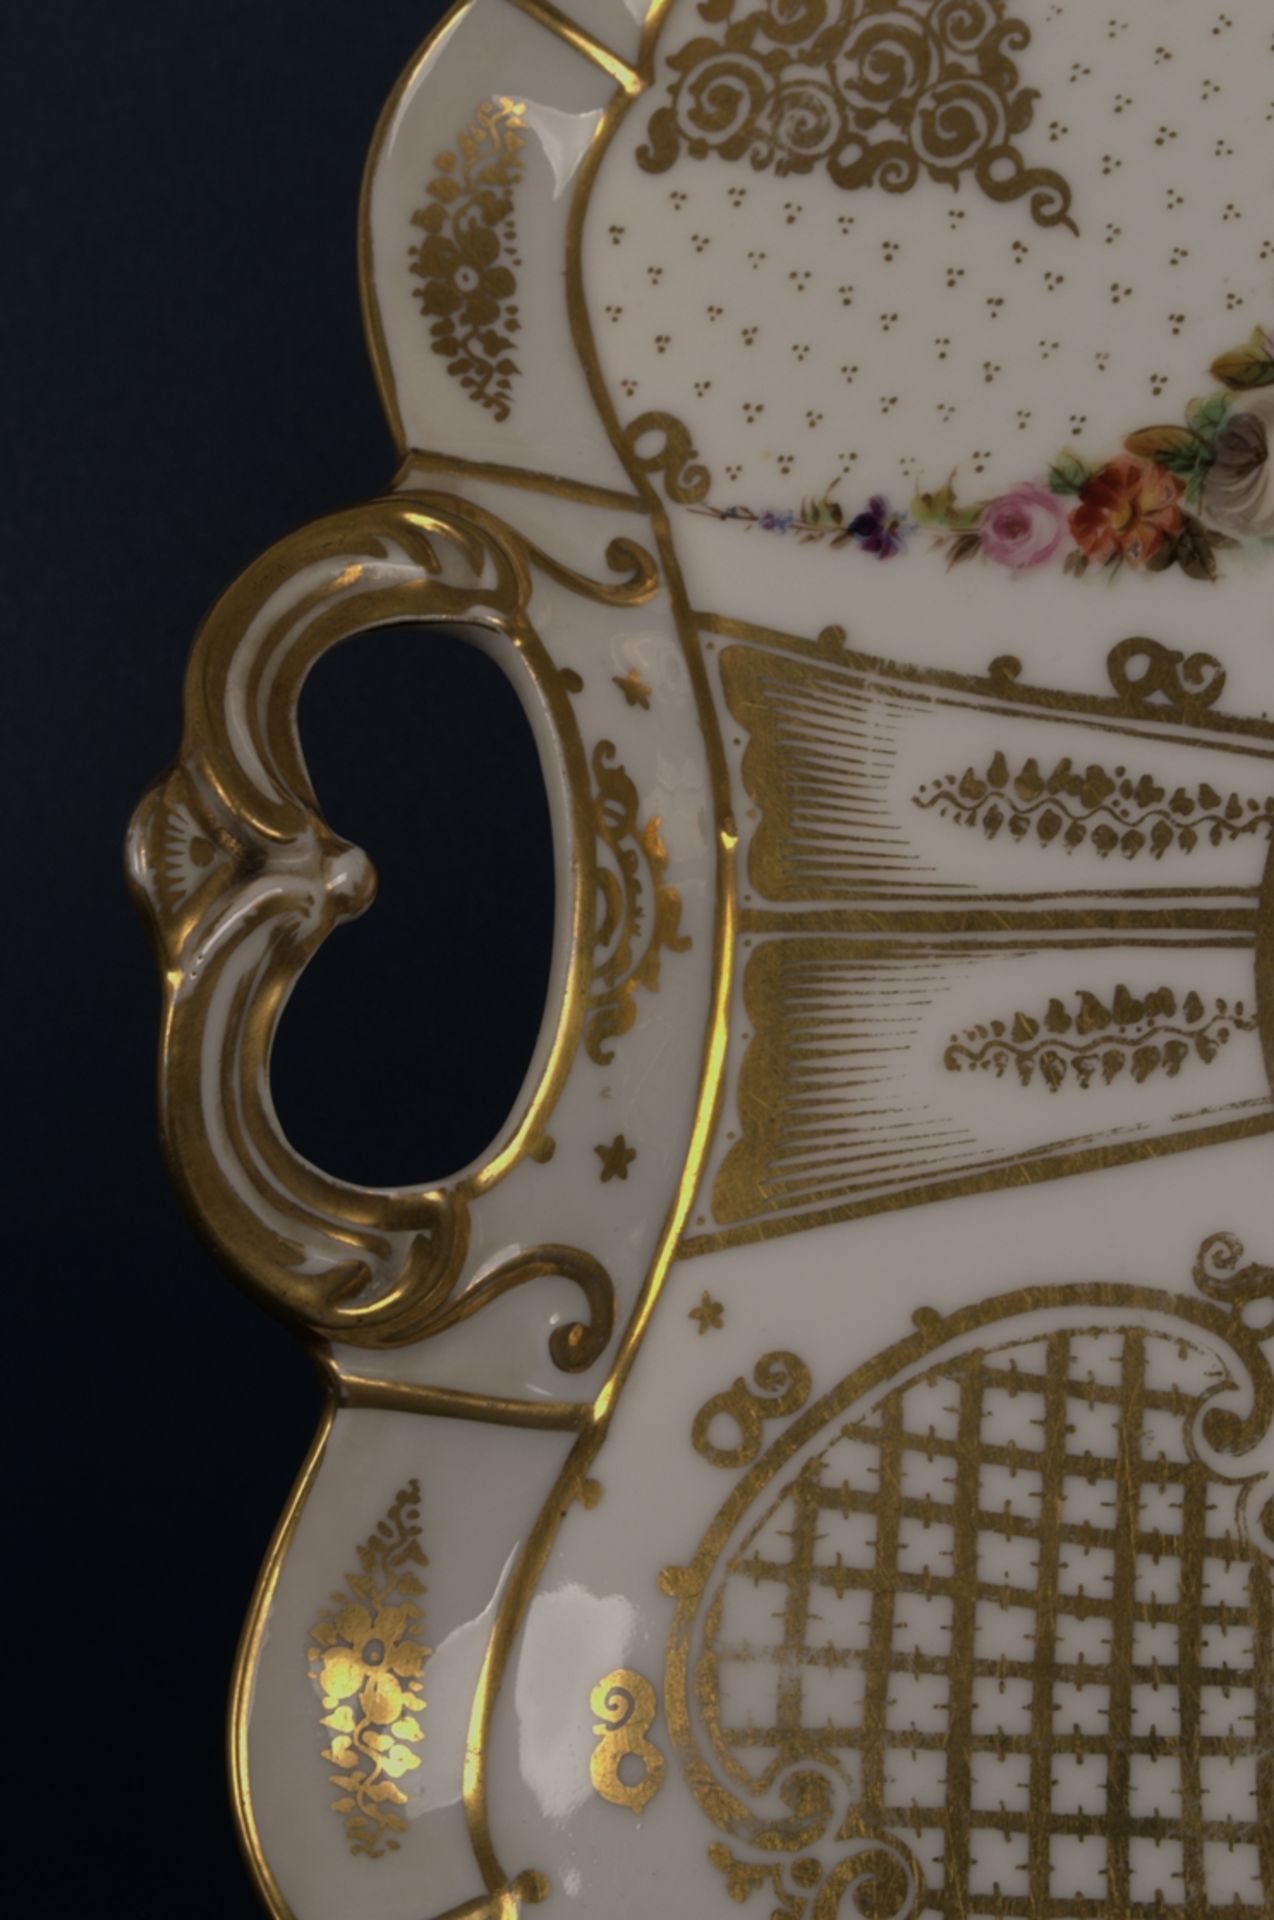 4teiliges Set, ungemarktes Weißporzellan mit polychromem Floral - & üppigem Golddekor; Belle - Image 12 of 16